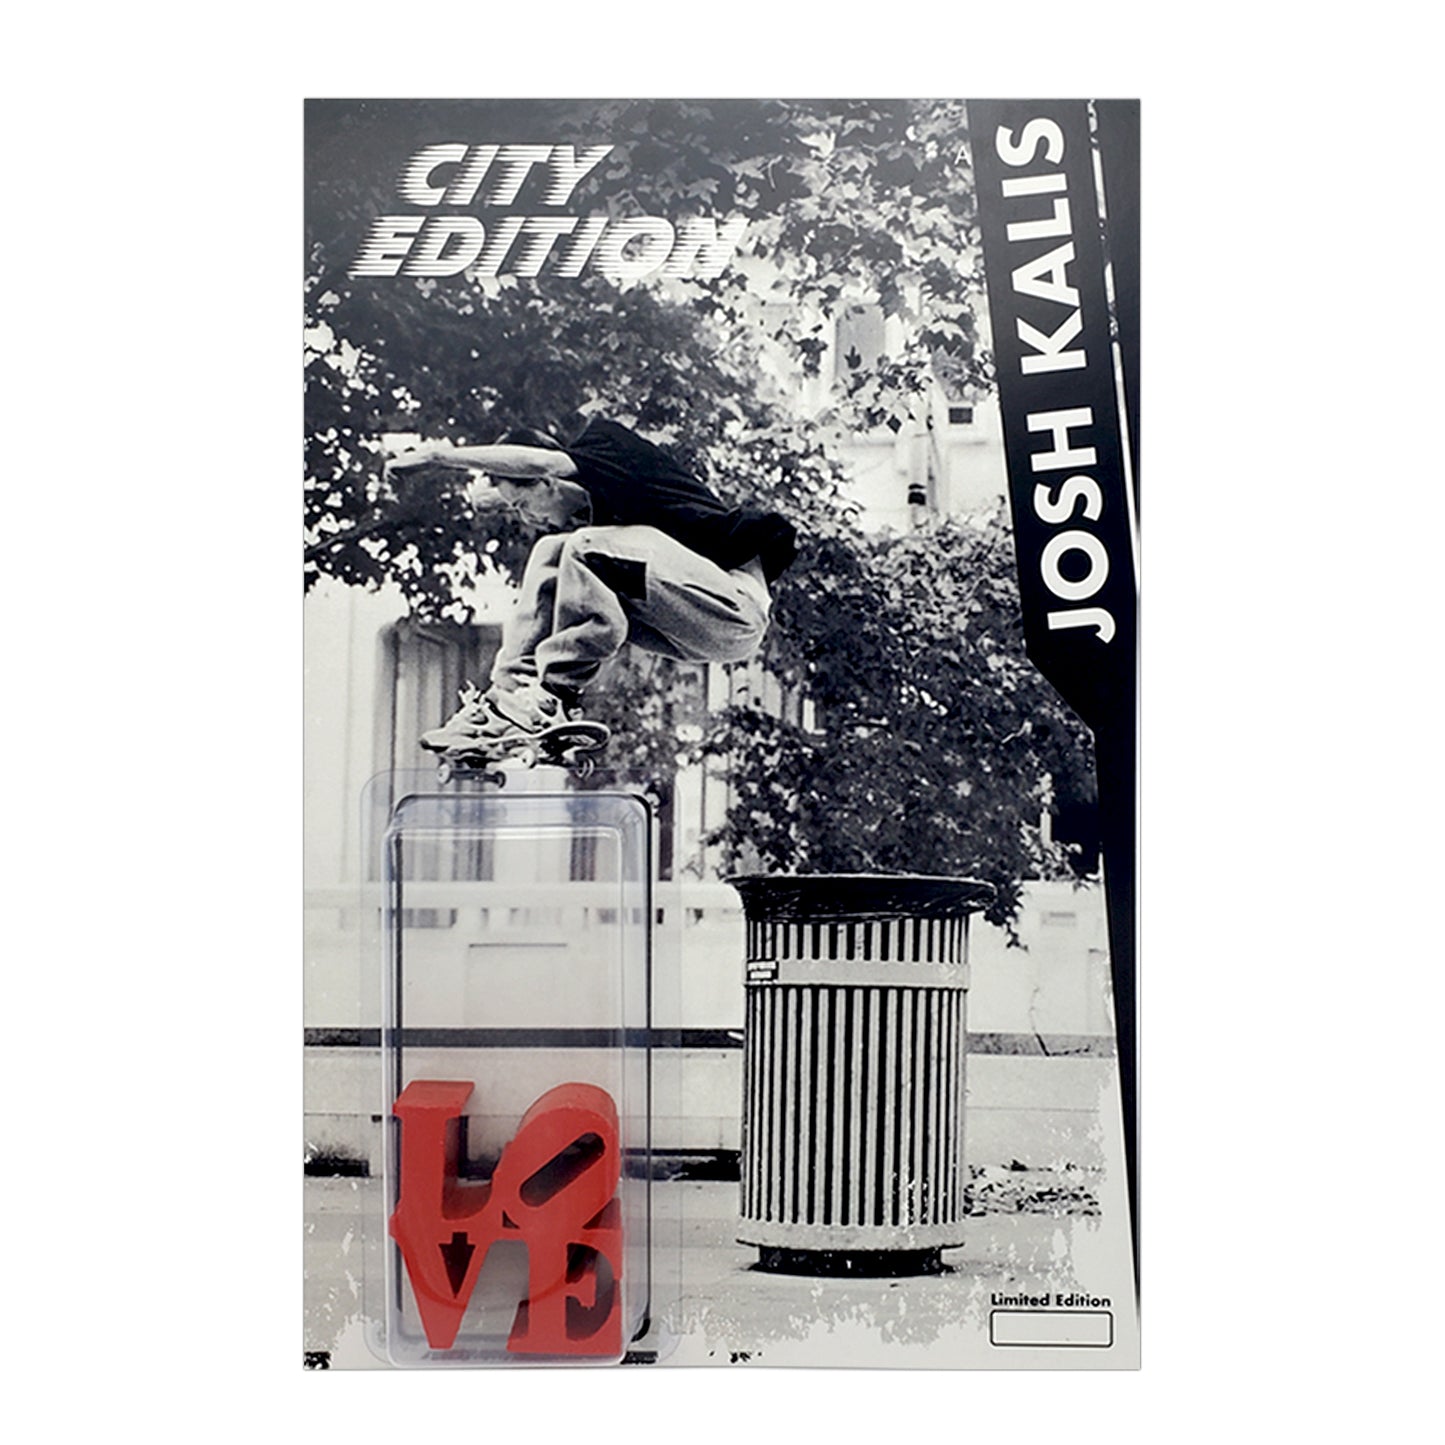 Josh Kalis - City Edition Limited Edition